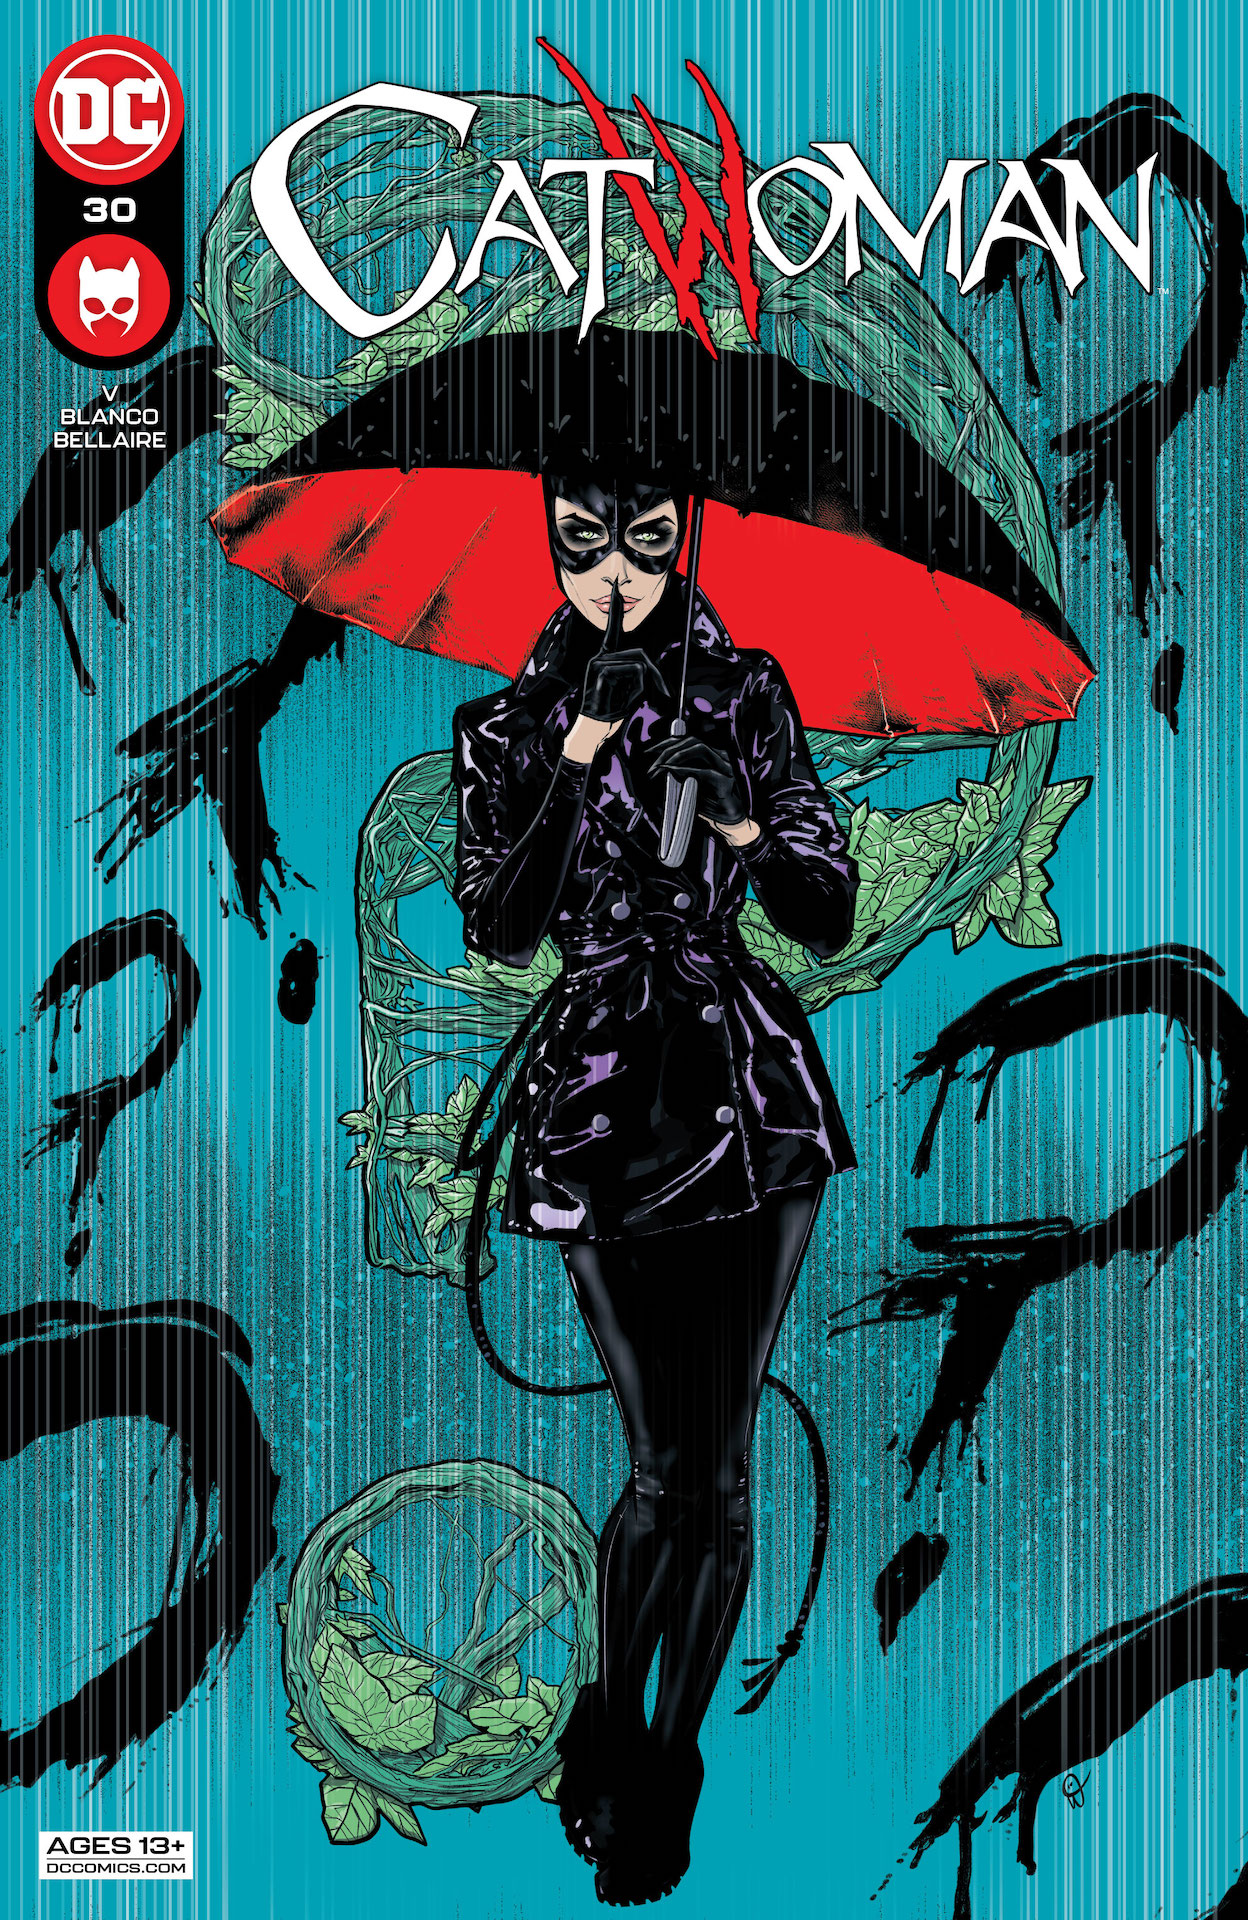 'Catwoman' #30 criss-crosses Gotham in the rain